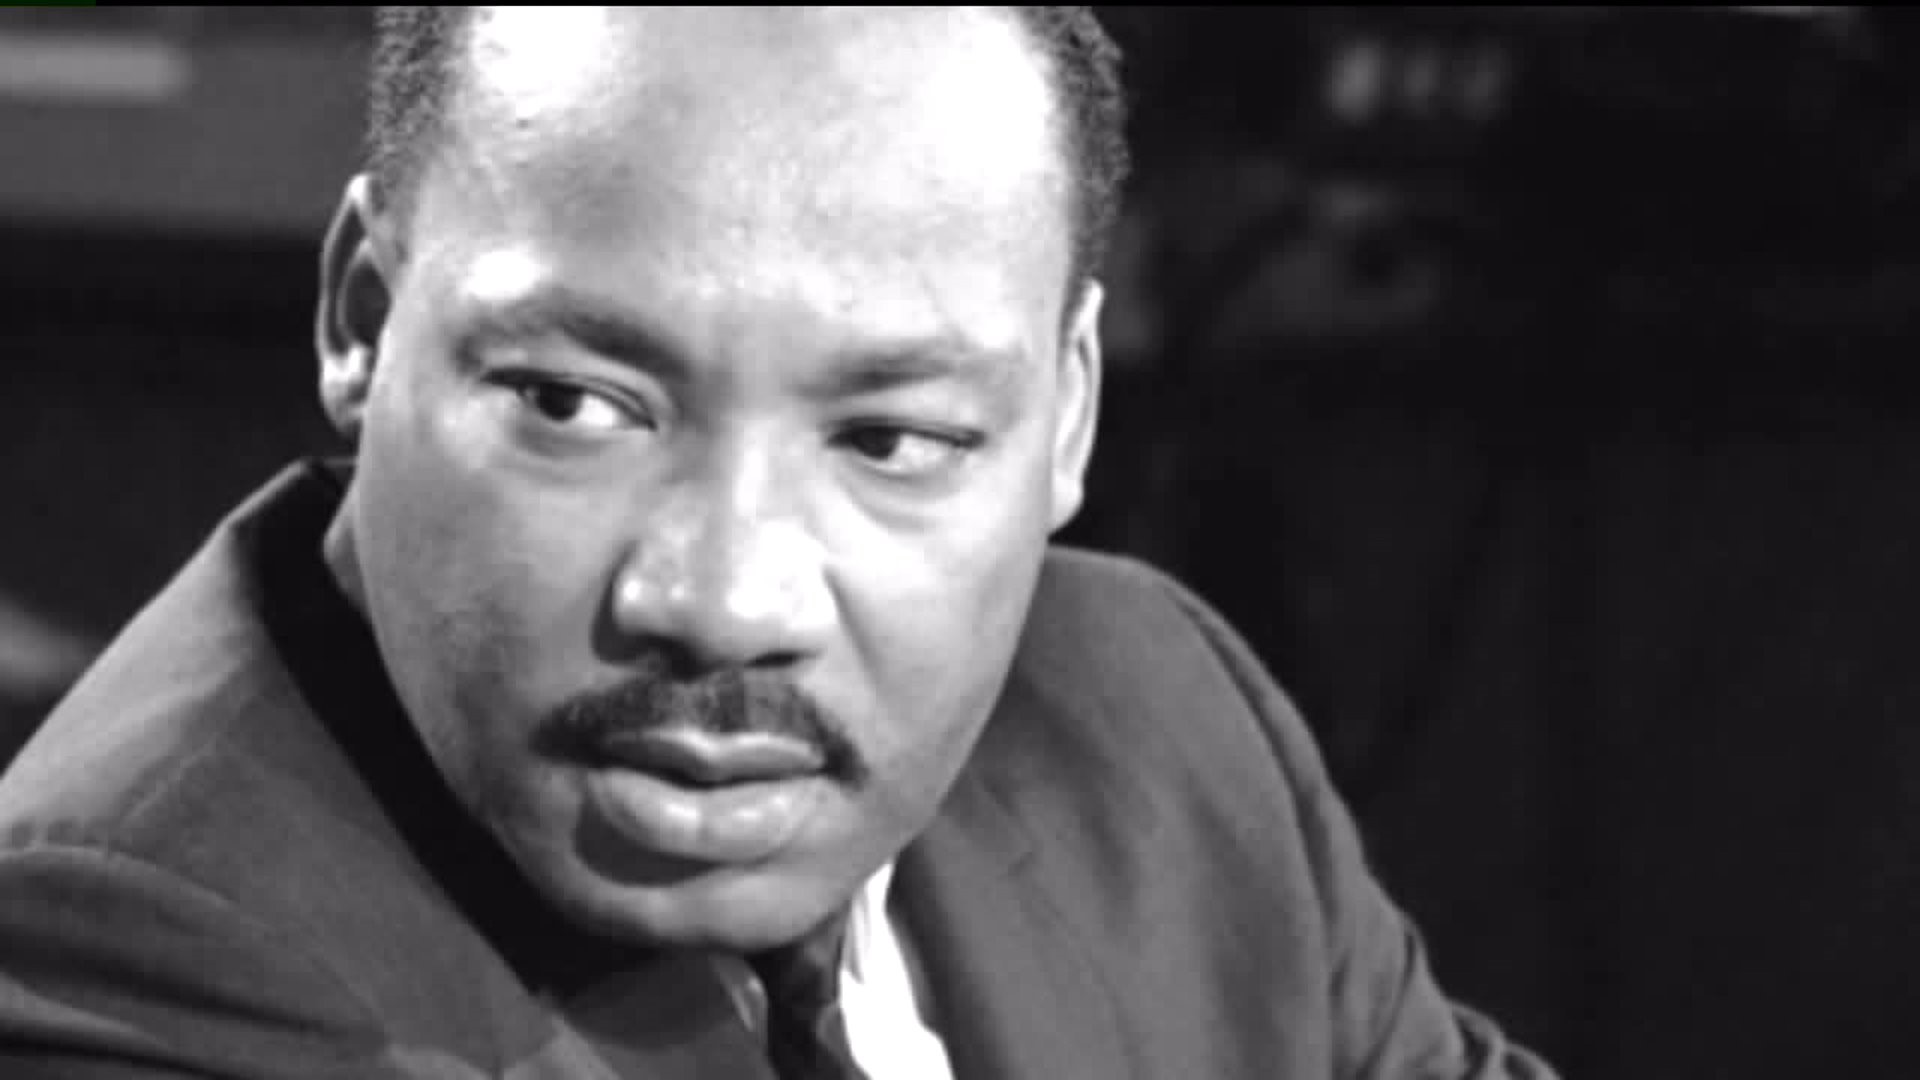 Remembering Rev. Martin Luther King Jr.